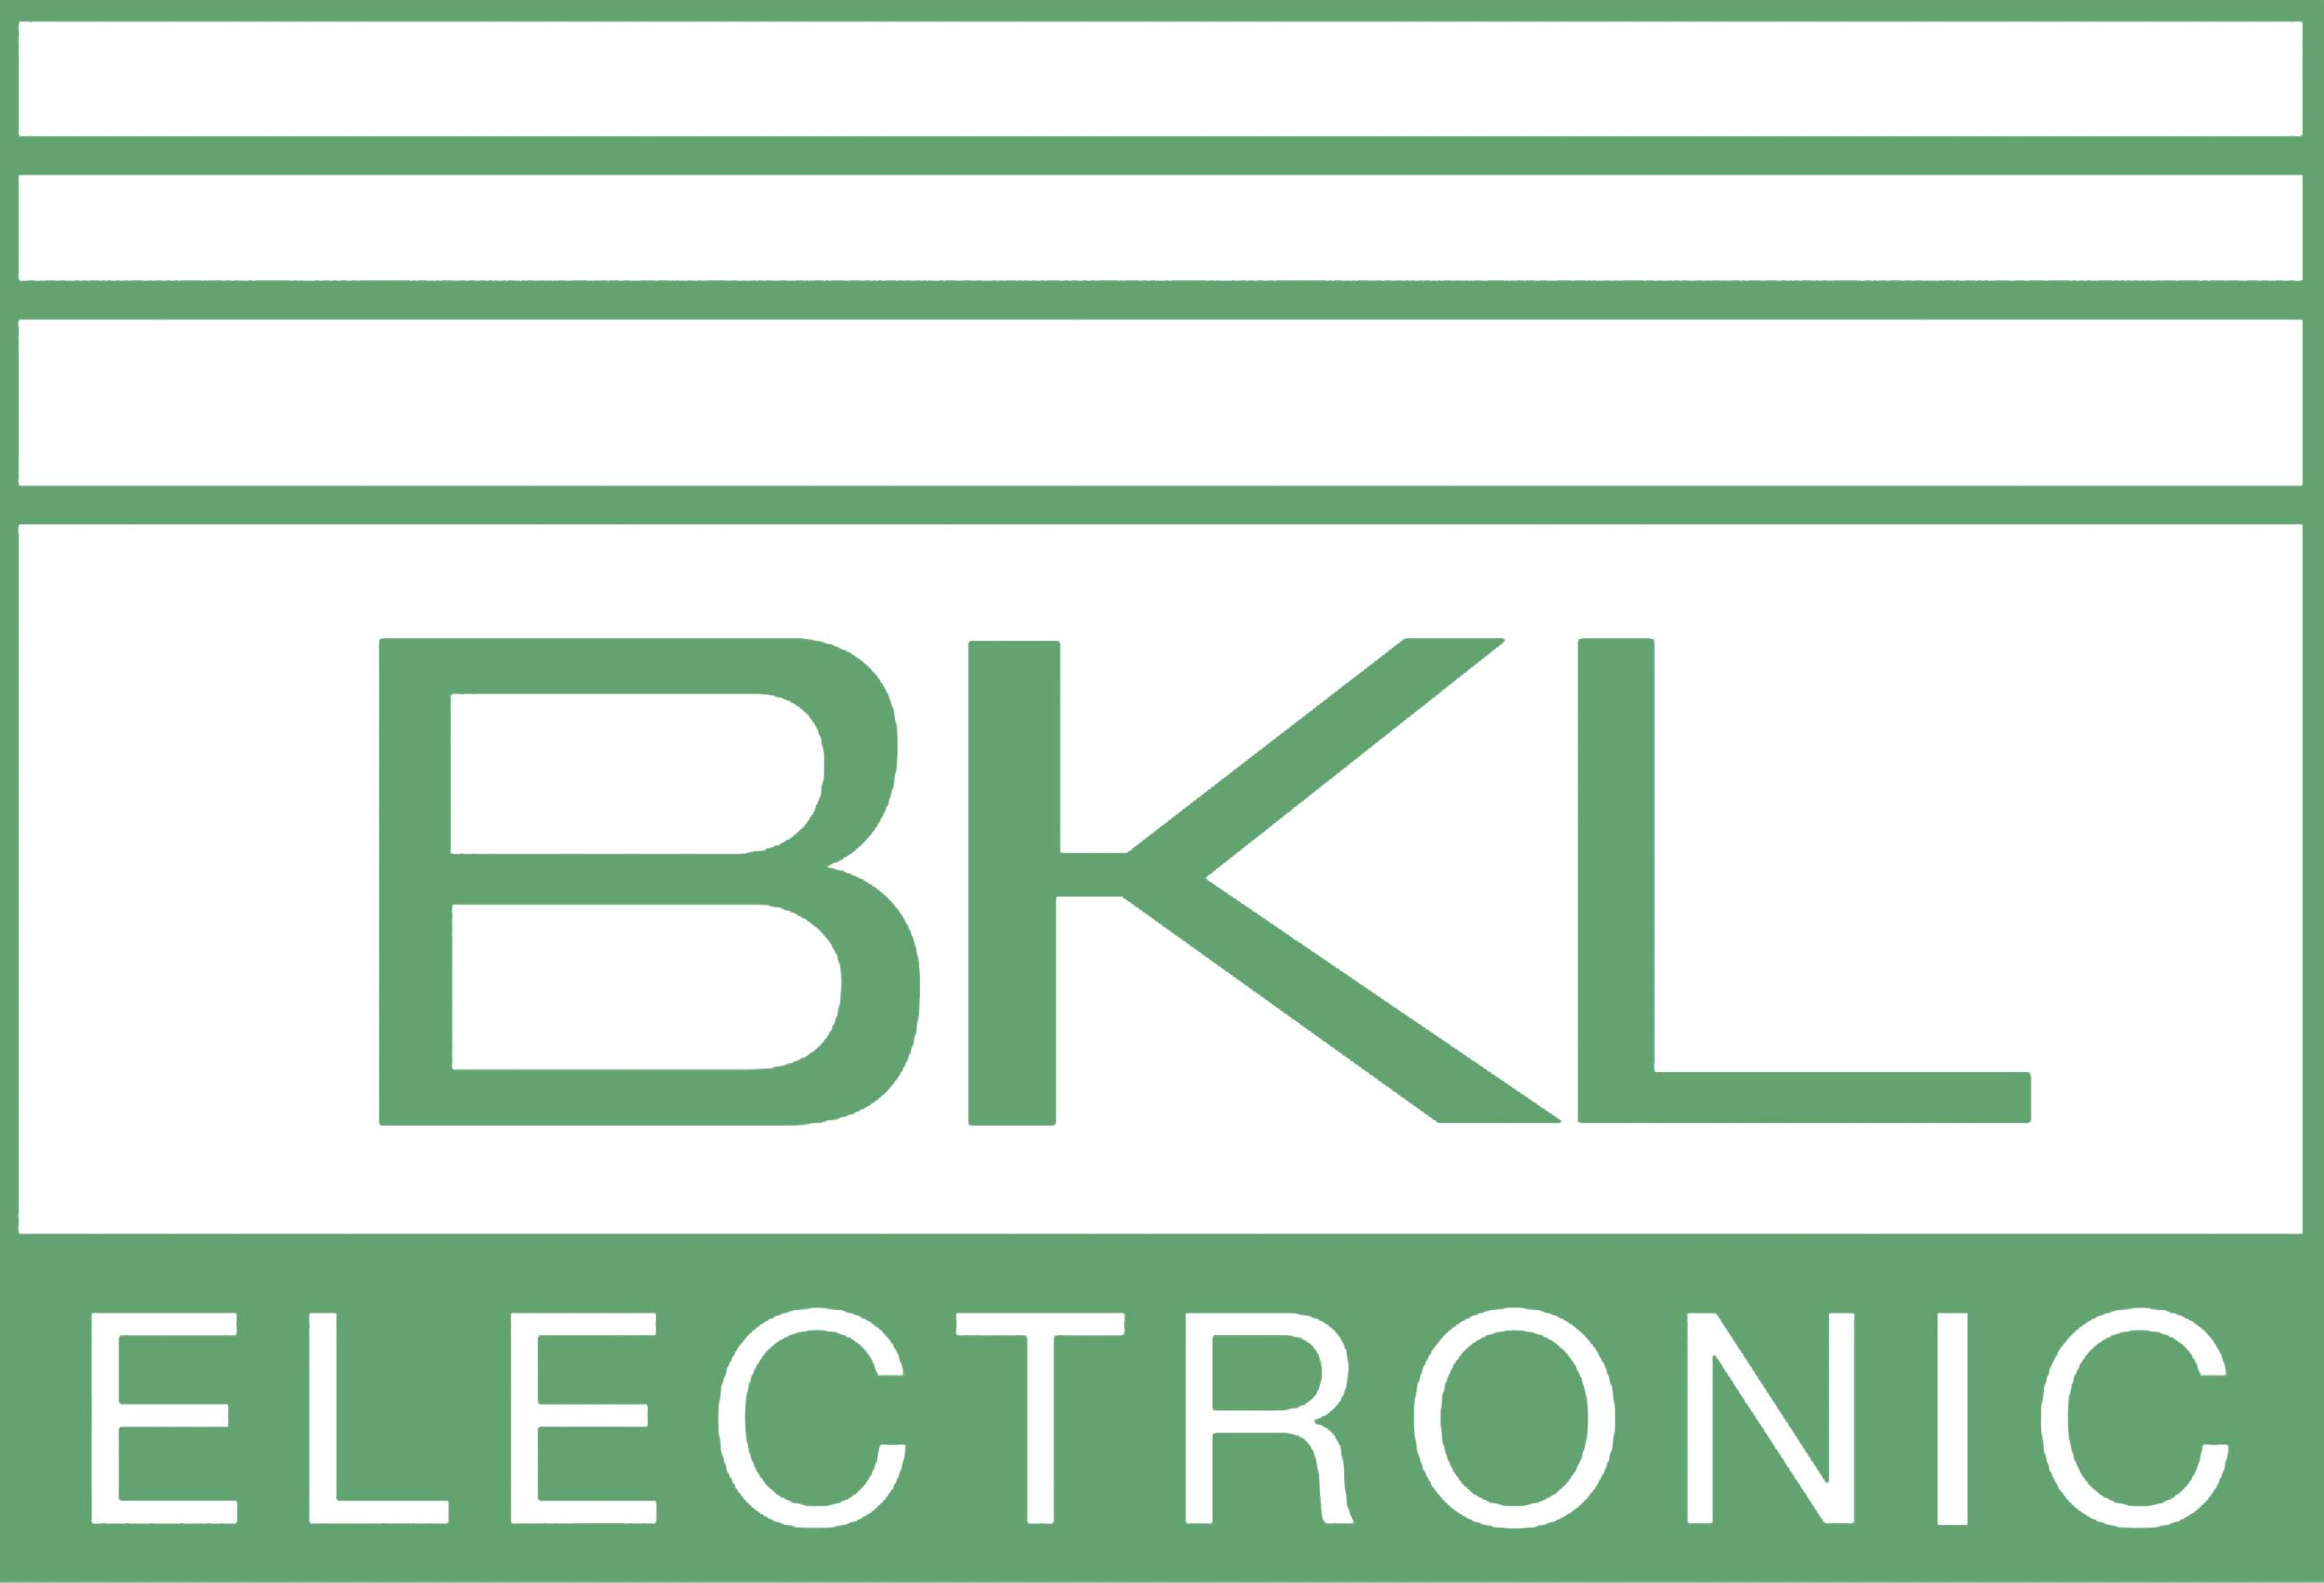 BKL Klinken-Steckverbinder 3.5 mm Stecker, gerade Polzahl: 3 Stereo Silber BKL Electronic 1107003 1